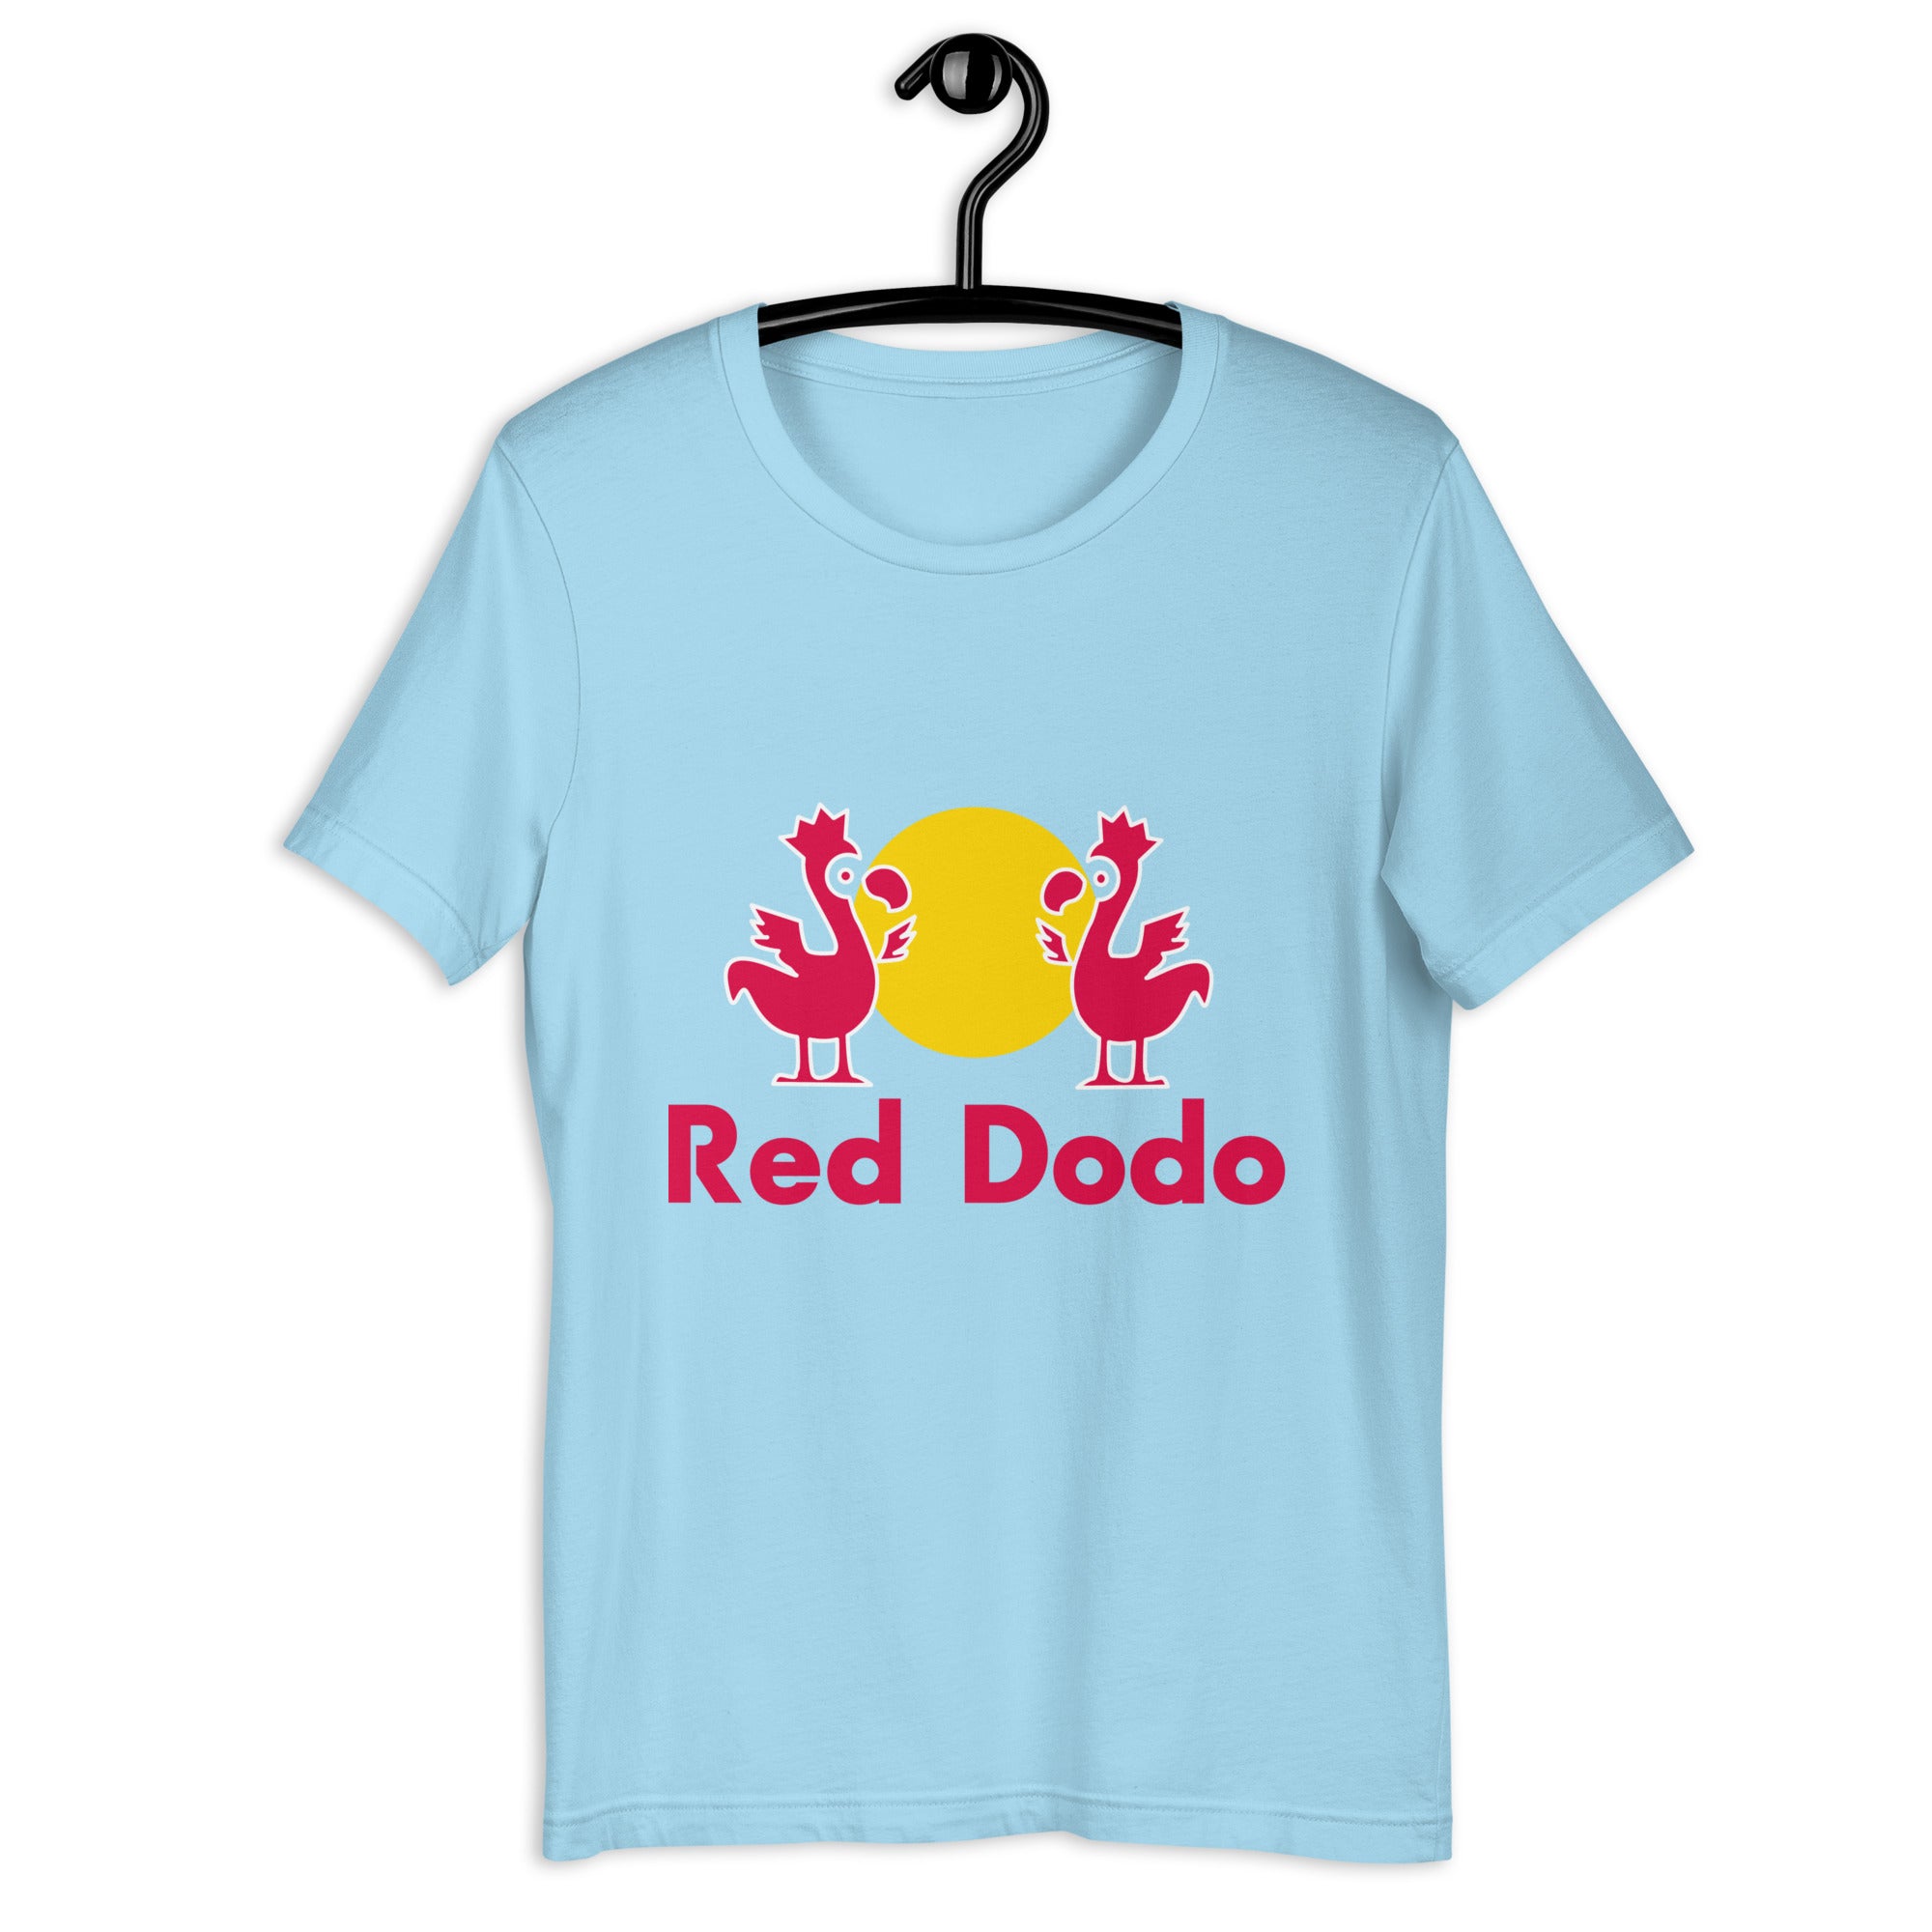 RED DODO